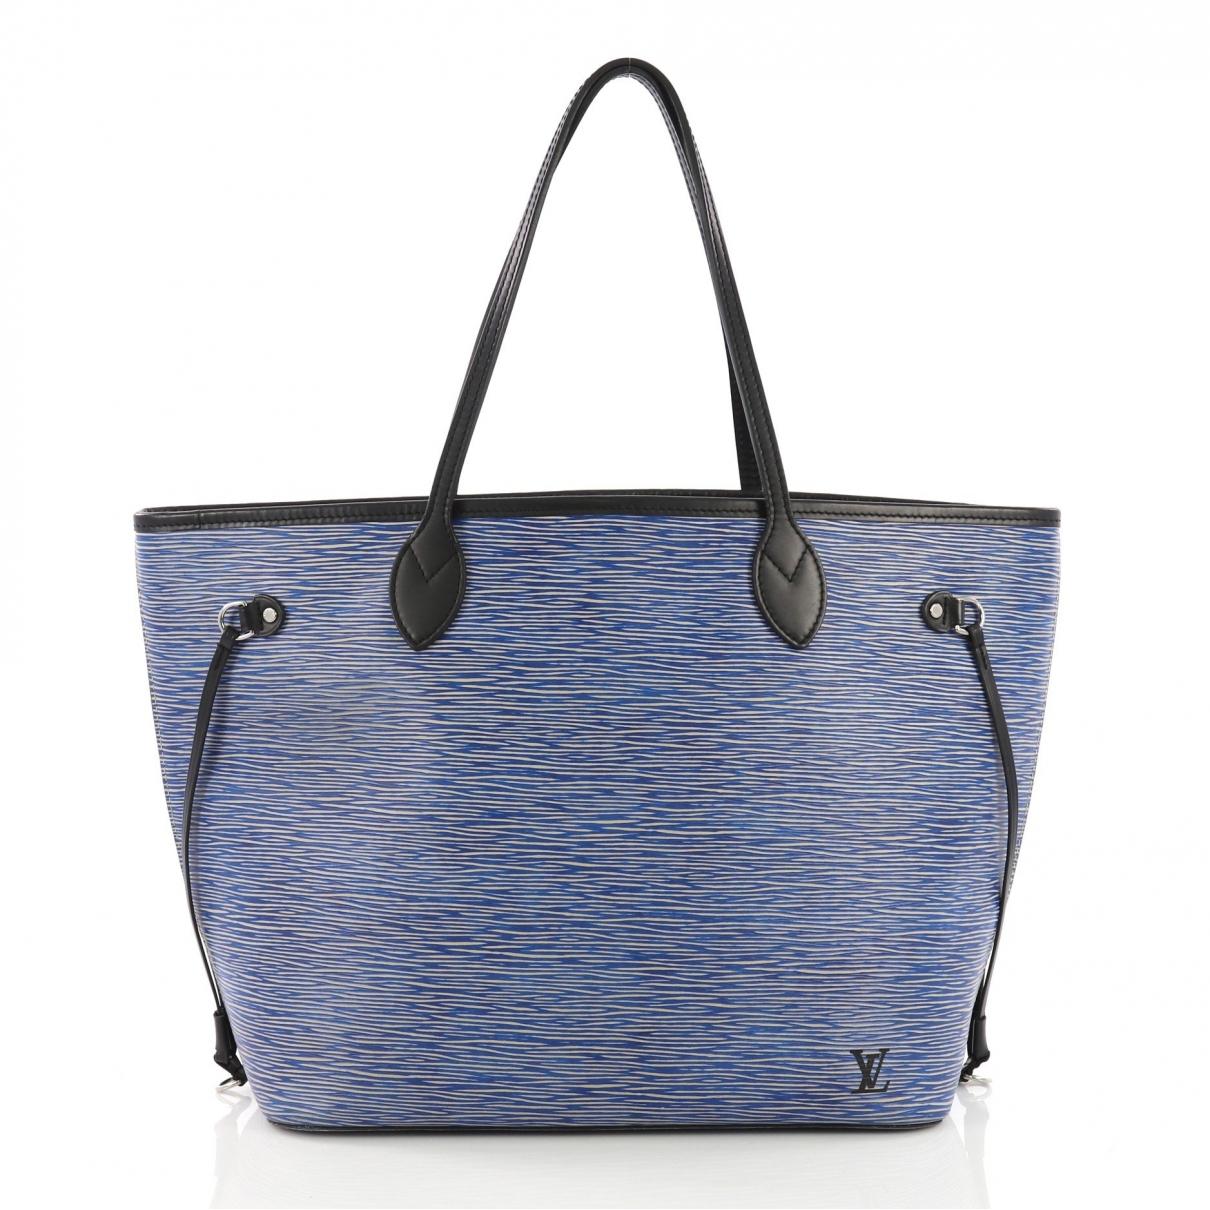 Louis Vuitton Neverfull Blue Leather Handbag in Blue - Lyst